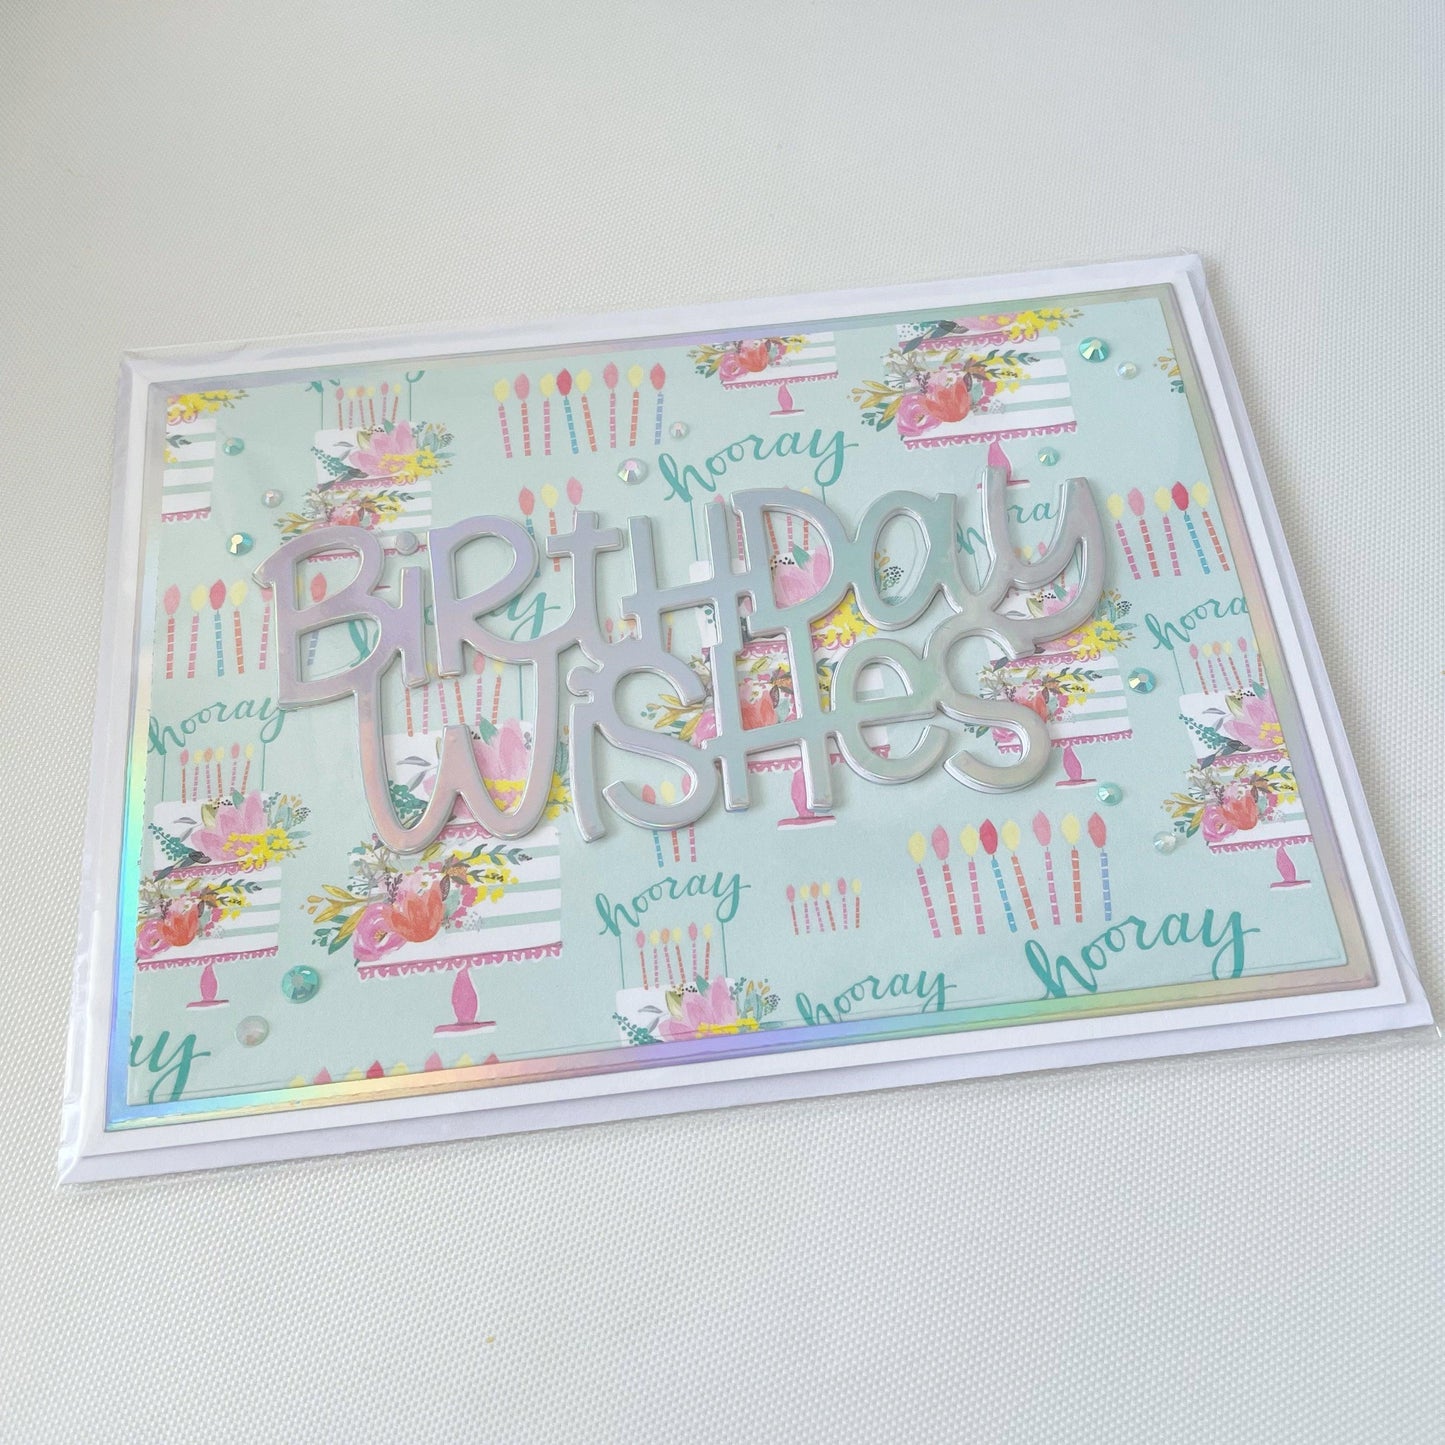 Handmade 5x7 inch Landscape 'Birthday Wishes’ Card - Oliver Rose Designs